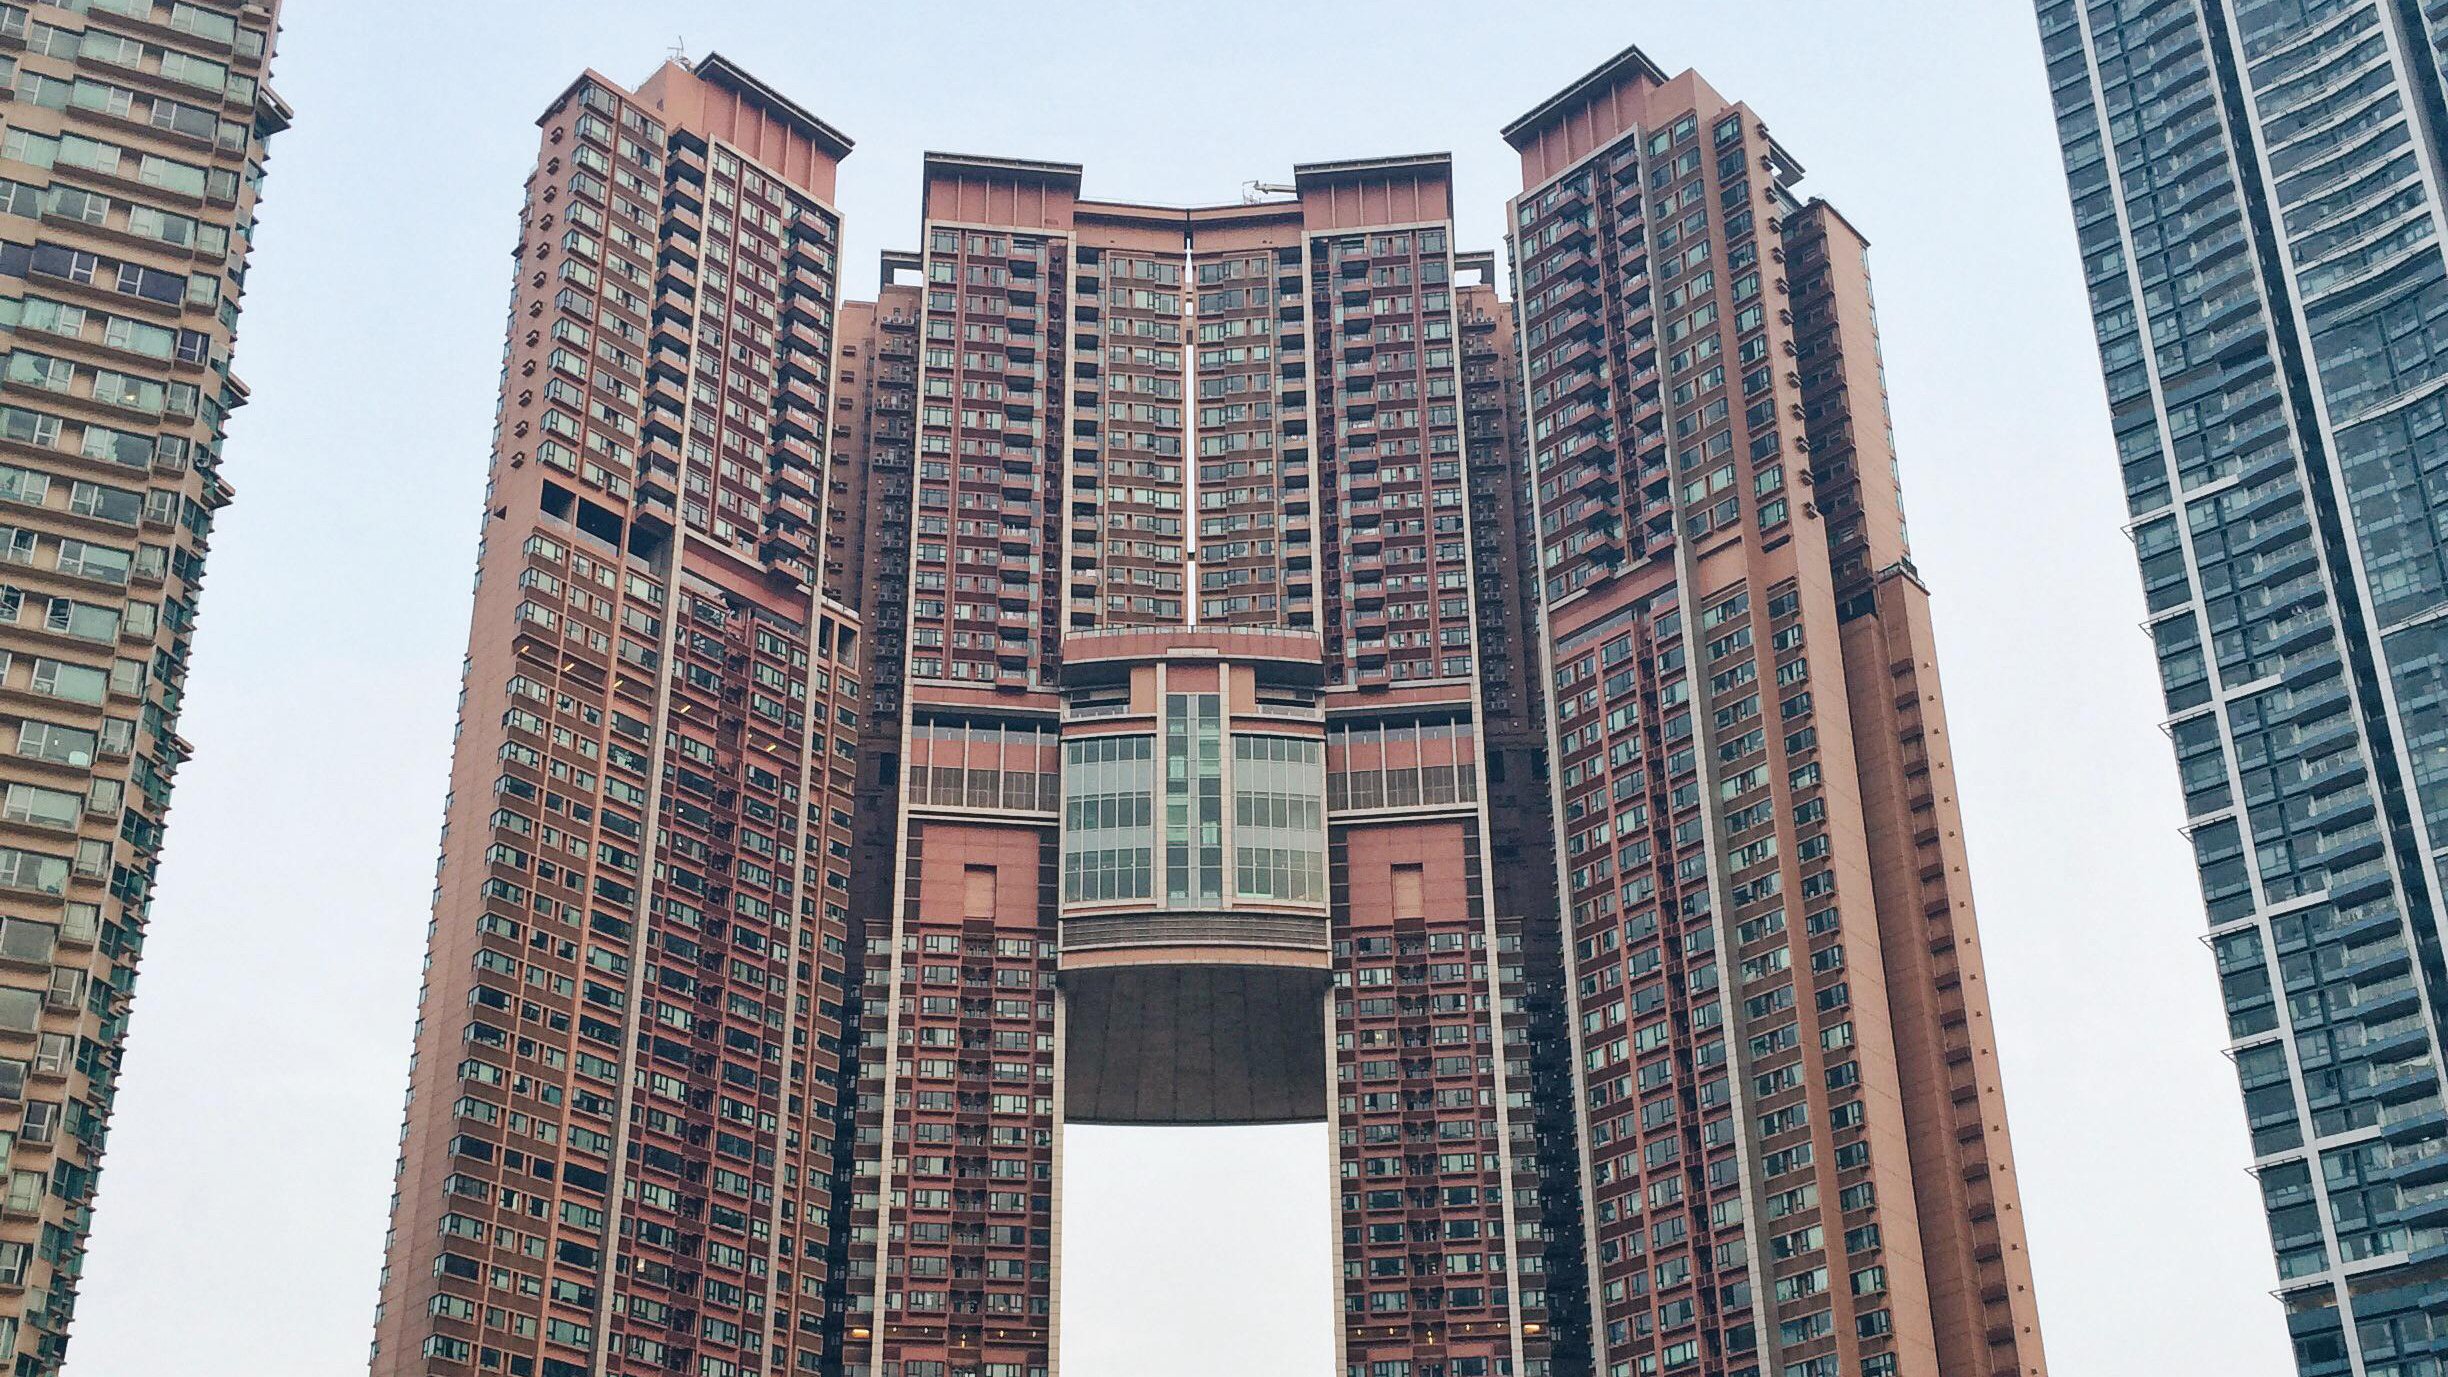 An experiential photograph Tyson took in Hong Kong.